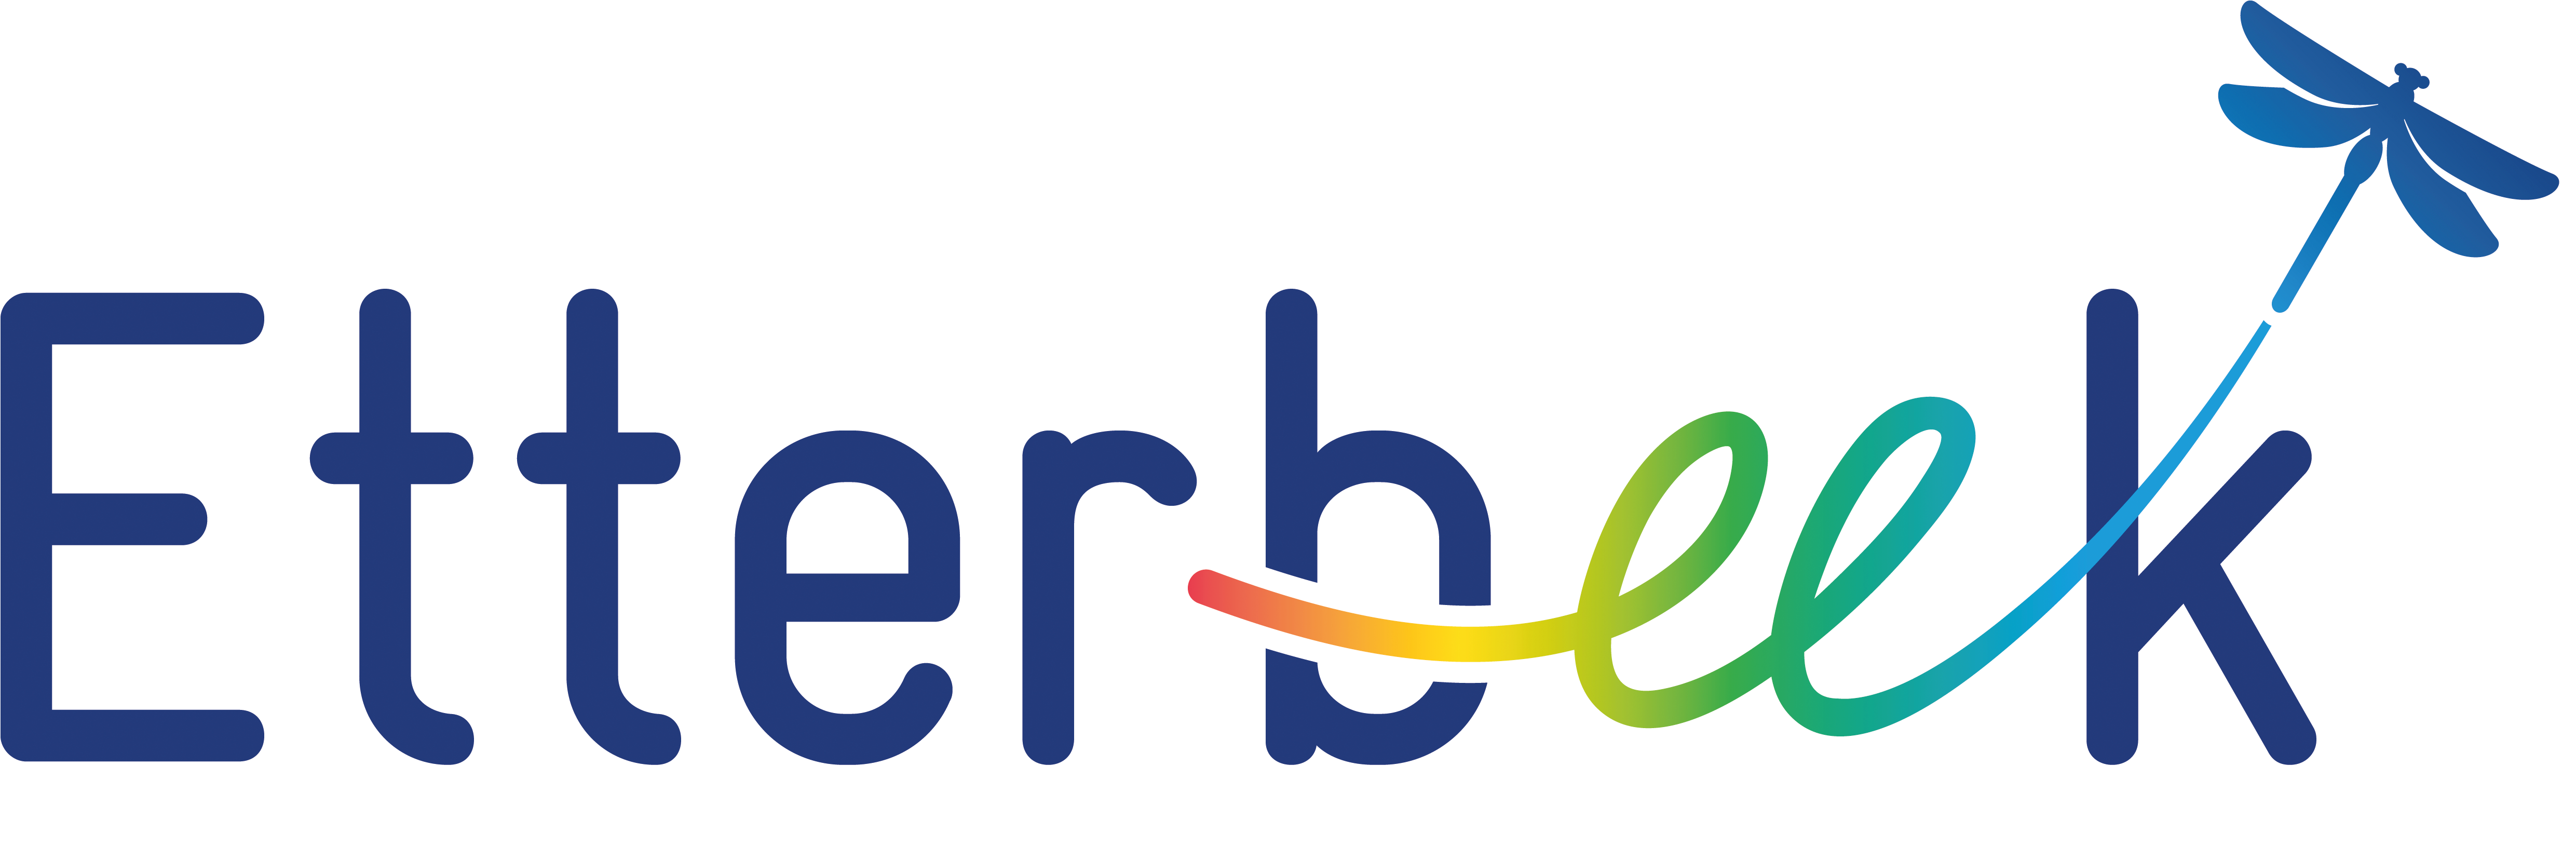 logo etterbeek